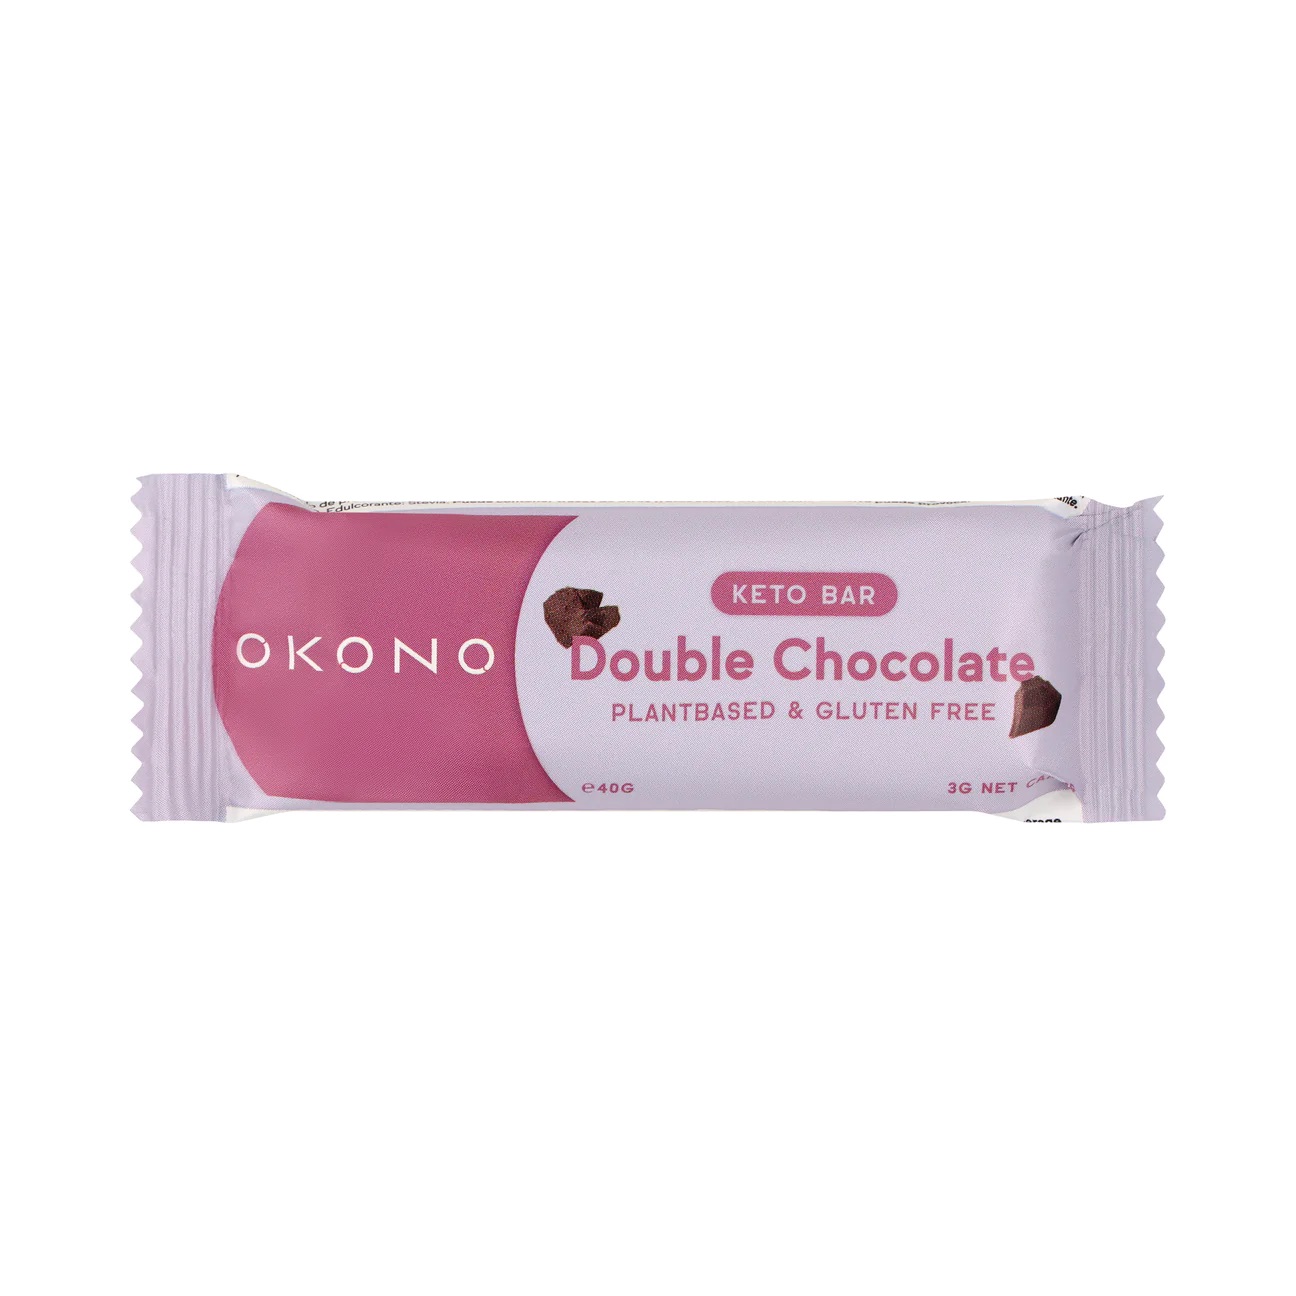 okono-keto-bar-dubbele-chocolade